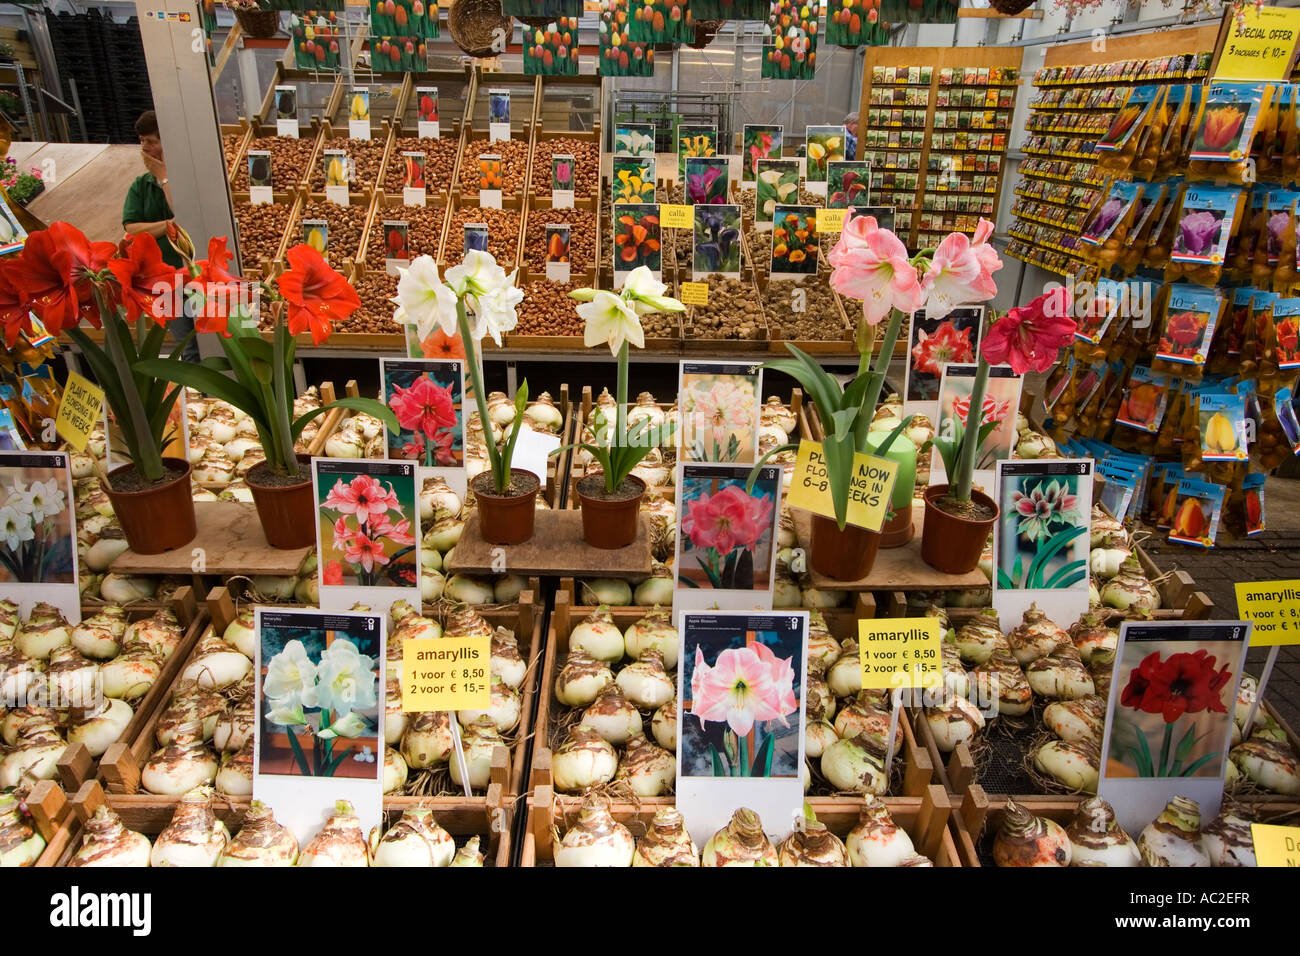 Amsterdam flower market seeds Stock Photo